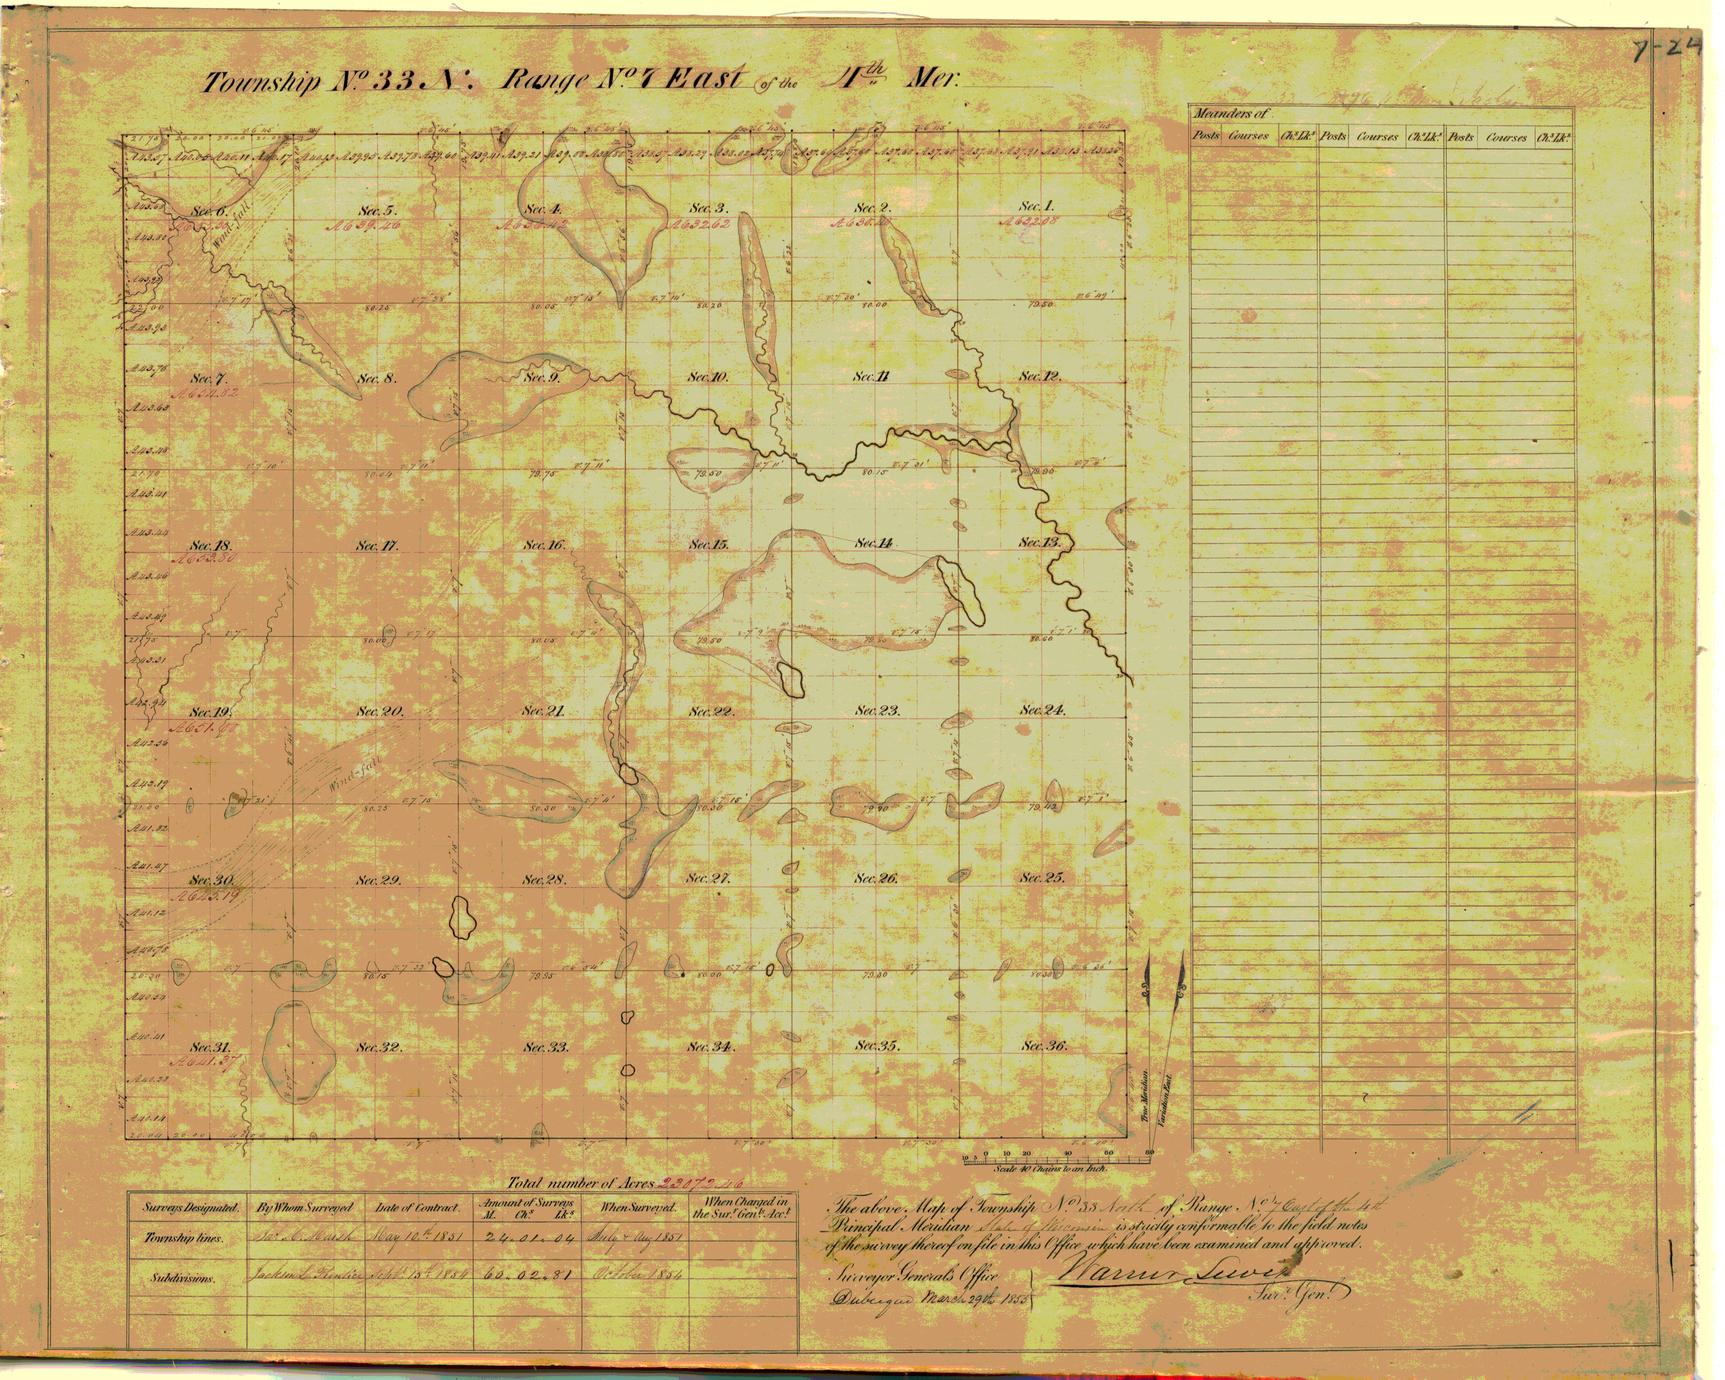 [Public Land Survey System map: Wisconsin Township 33 North, Range 07 East]